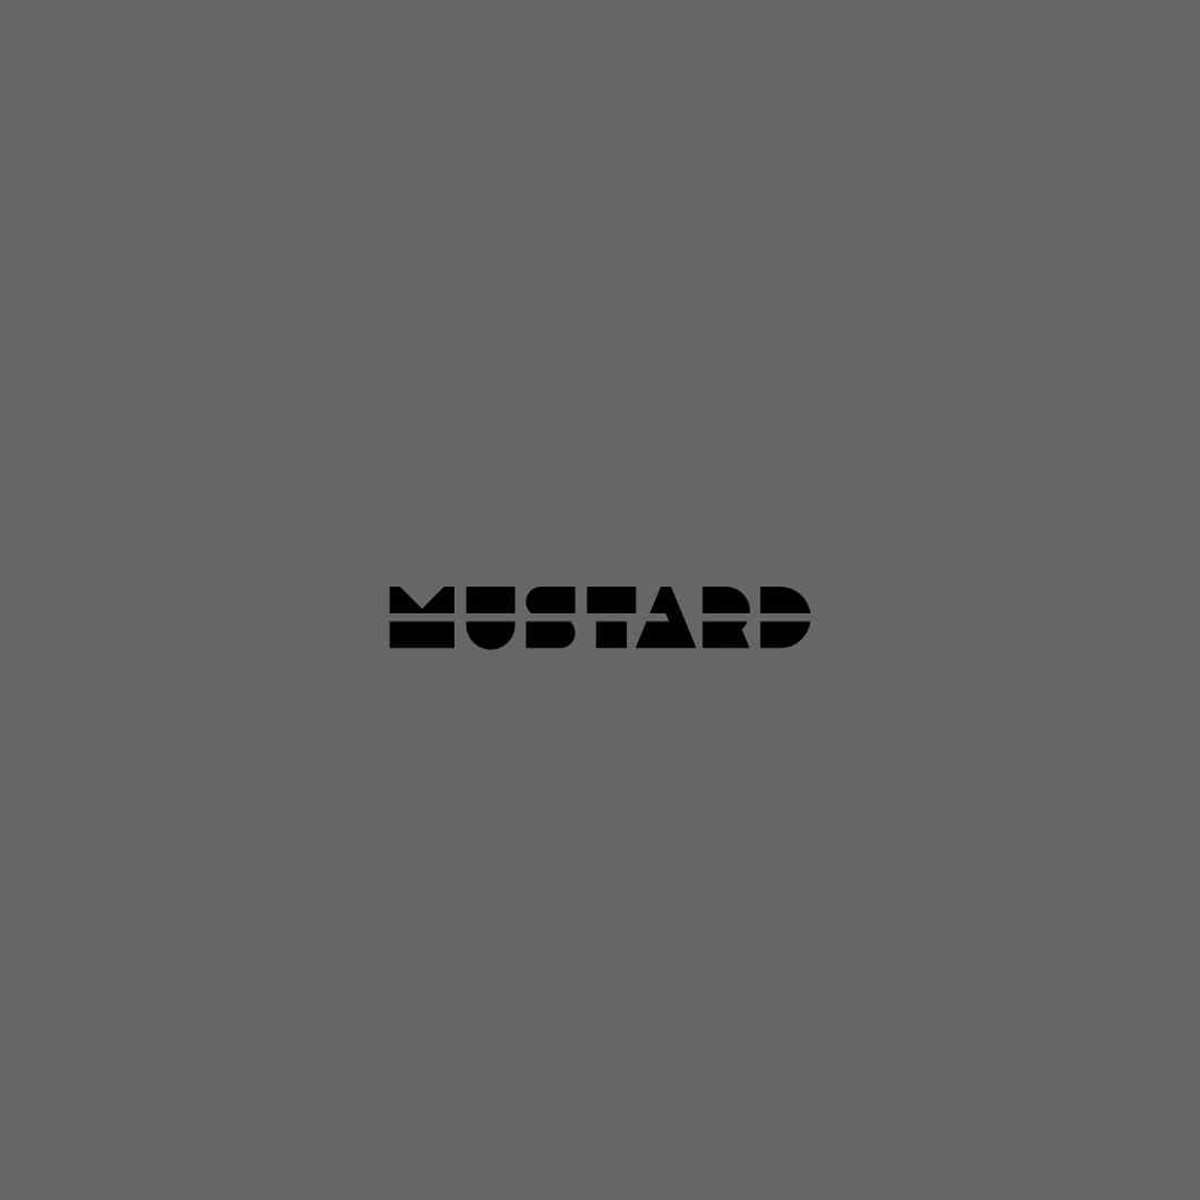 Mustard Coworking logotype – brand identity design by Superfried. Manchester.